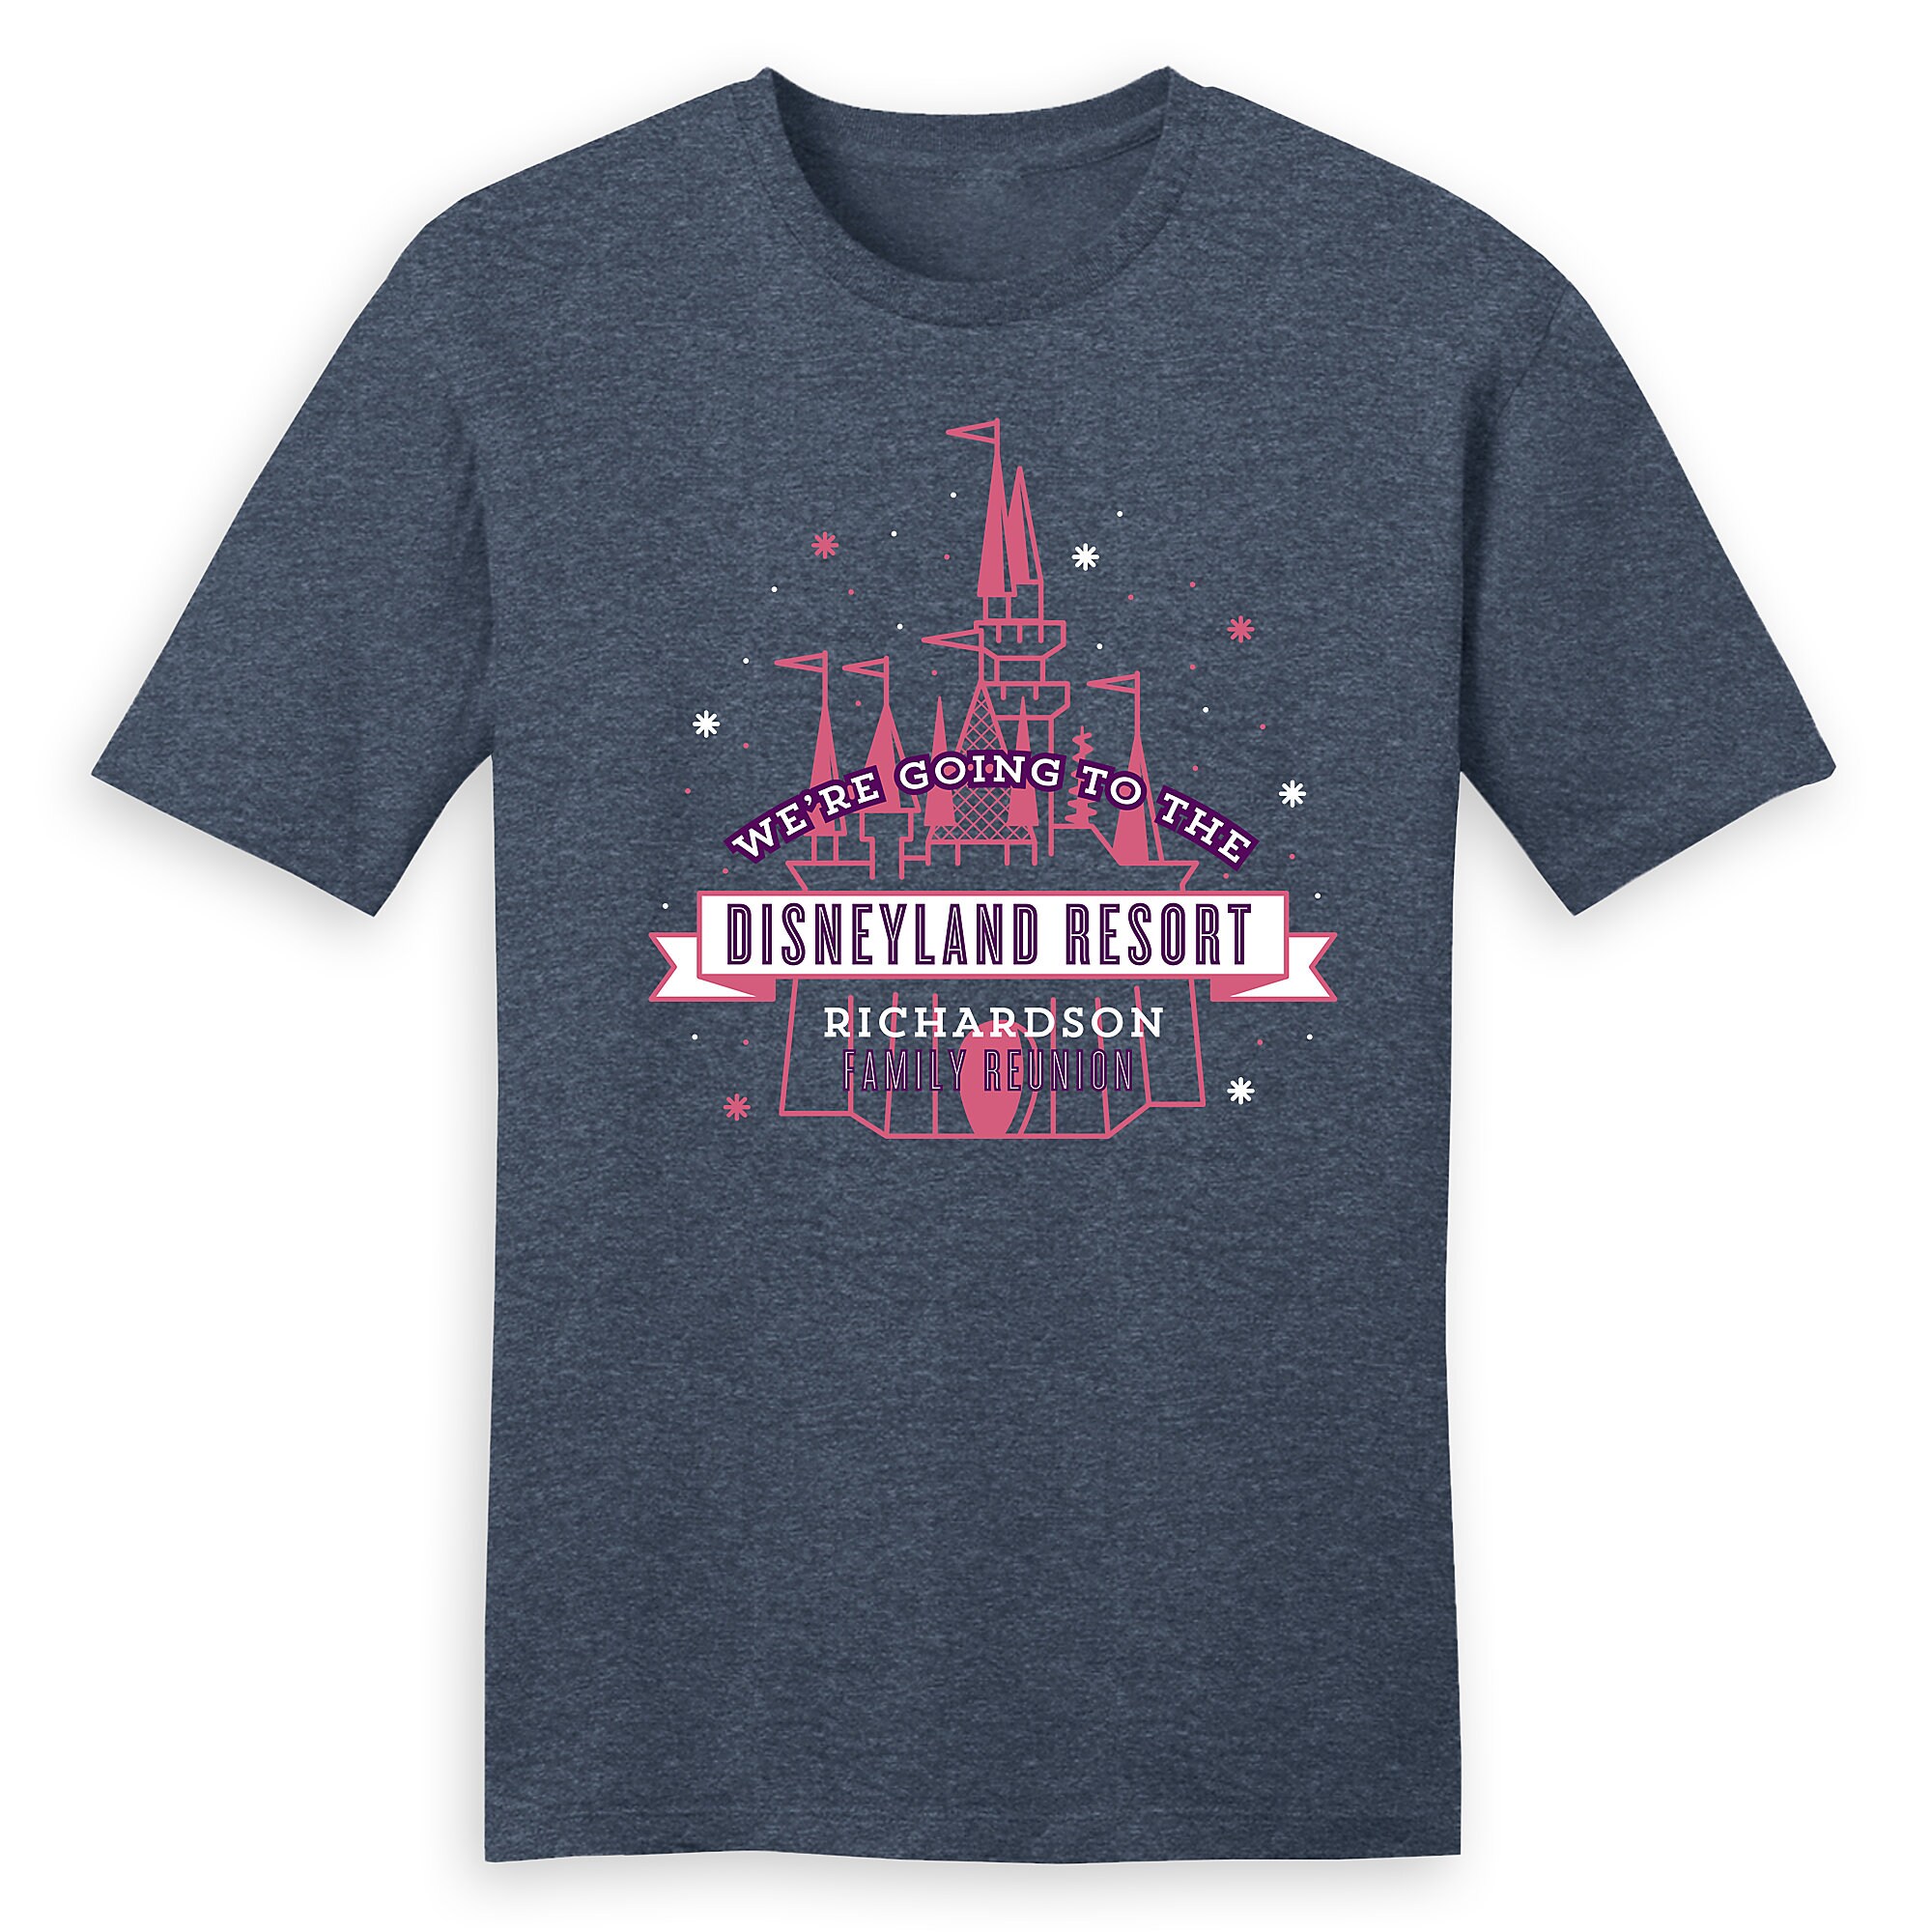 Adults' Sleeping Beauty Castle Family Reunion T-Shirt - Disneyland Resort - Customized